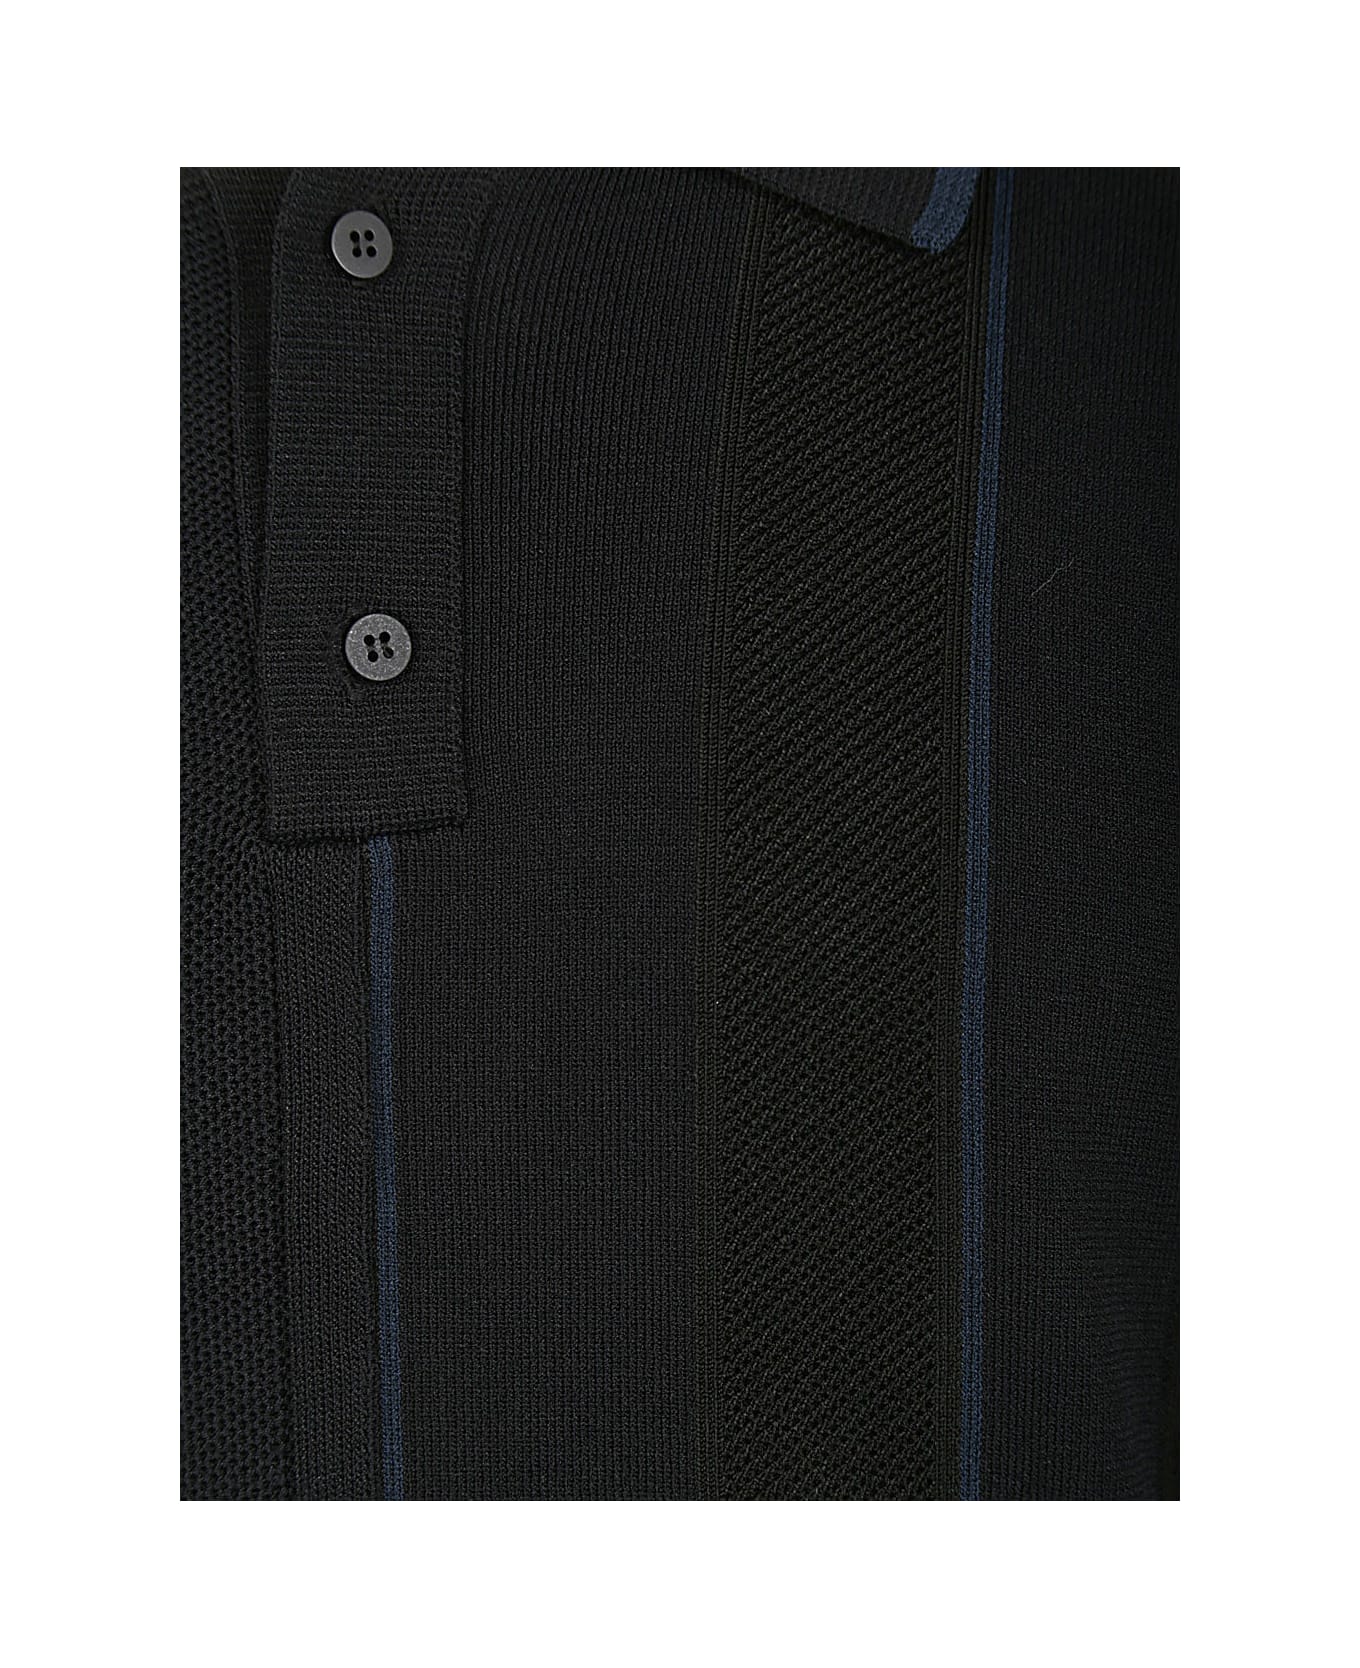 Jacquemus Juego Polo - Black ポロシャツ